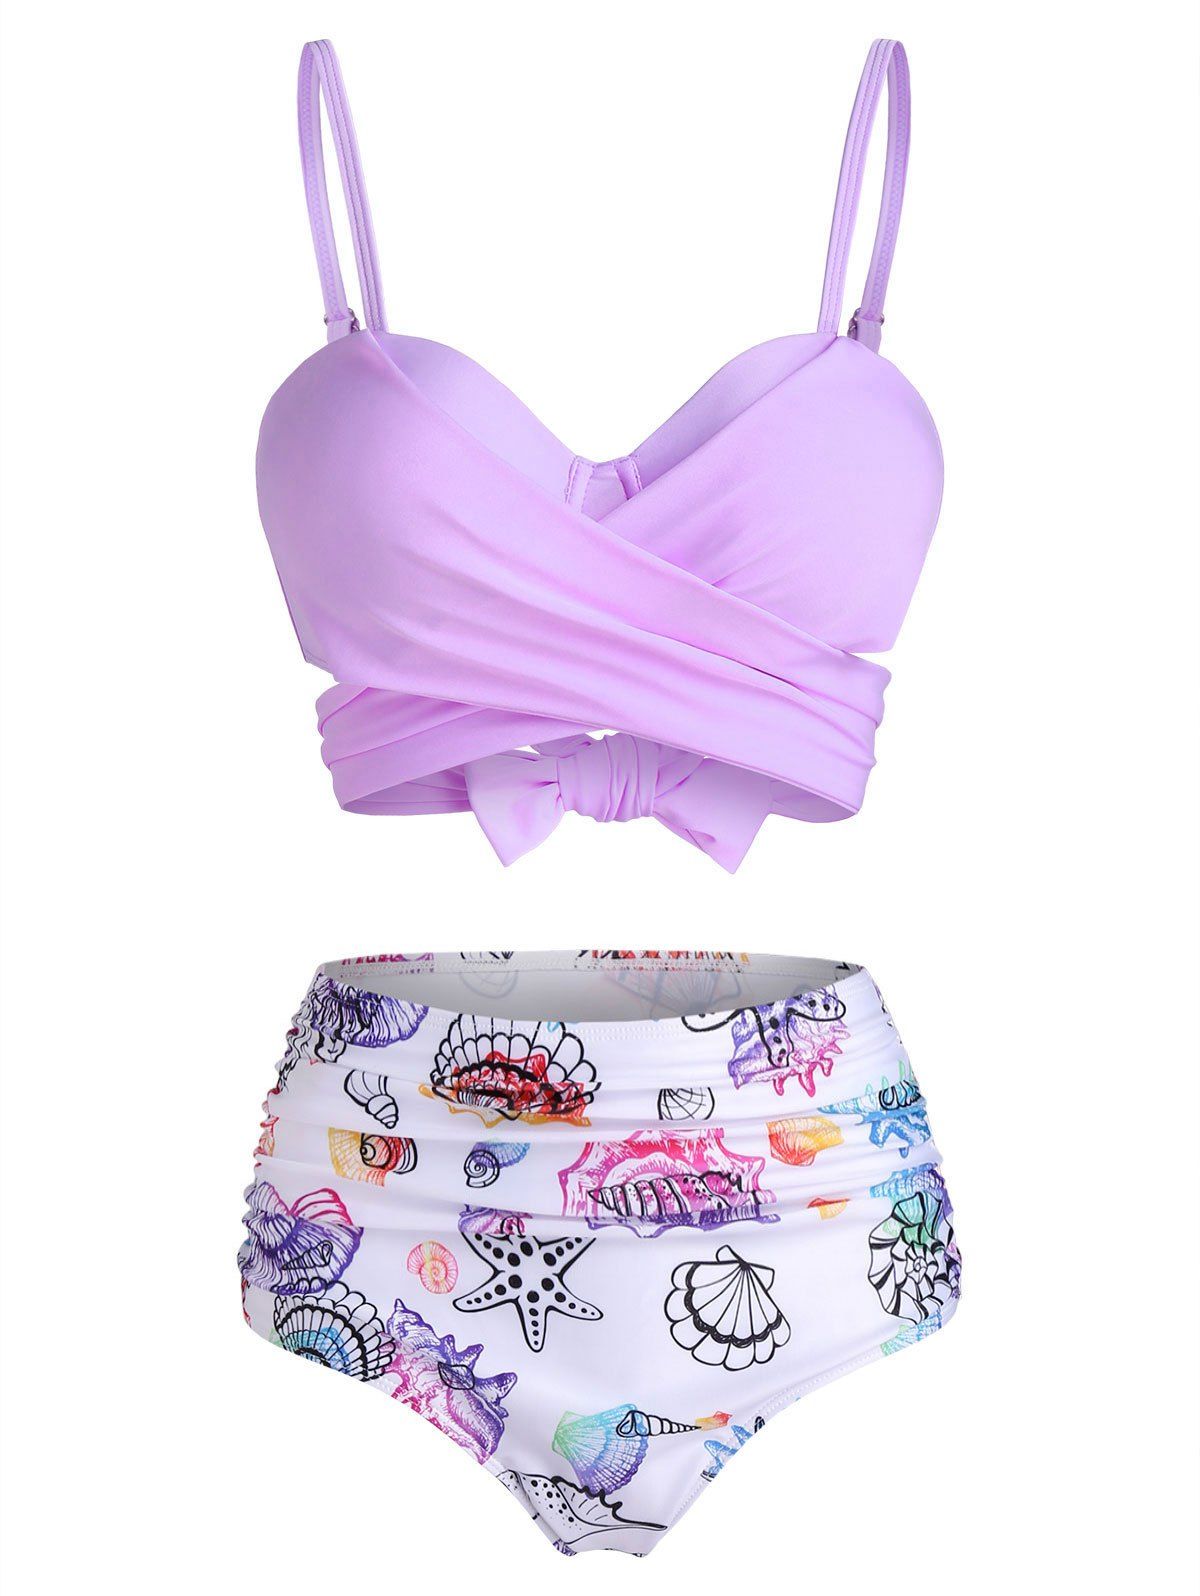 Shell Starfish Print Padded Wrap Bikini Set - LIGHT PURPLE L